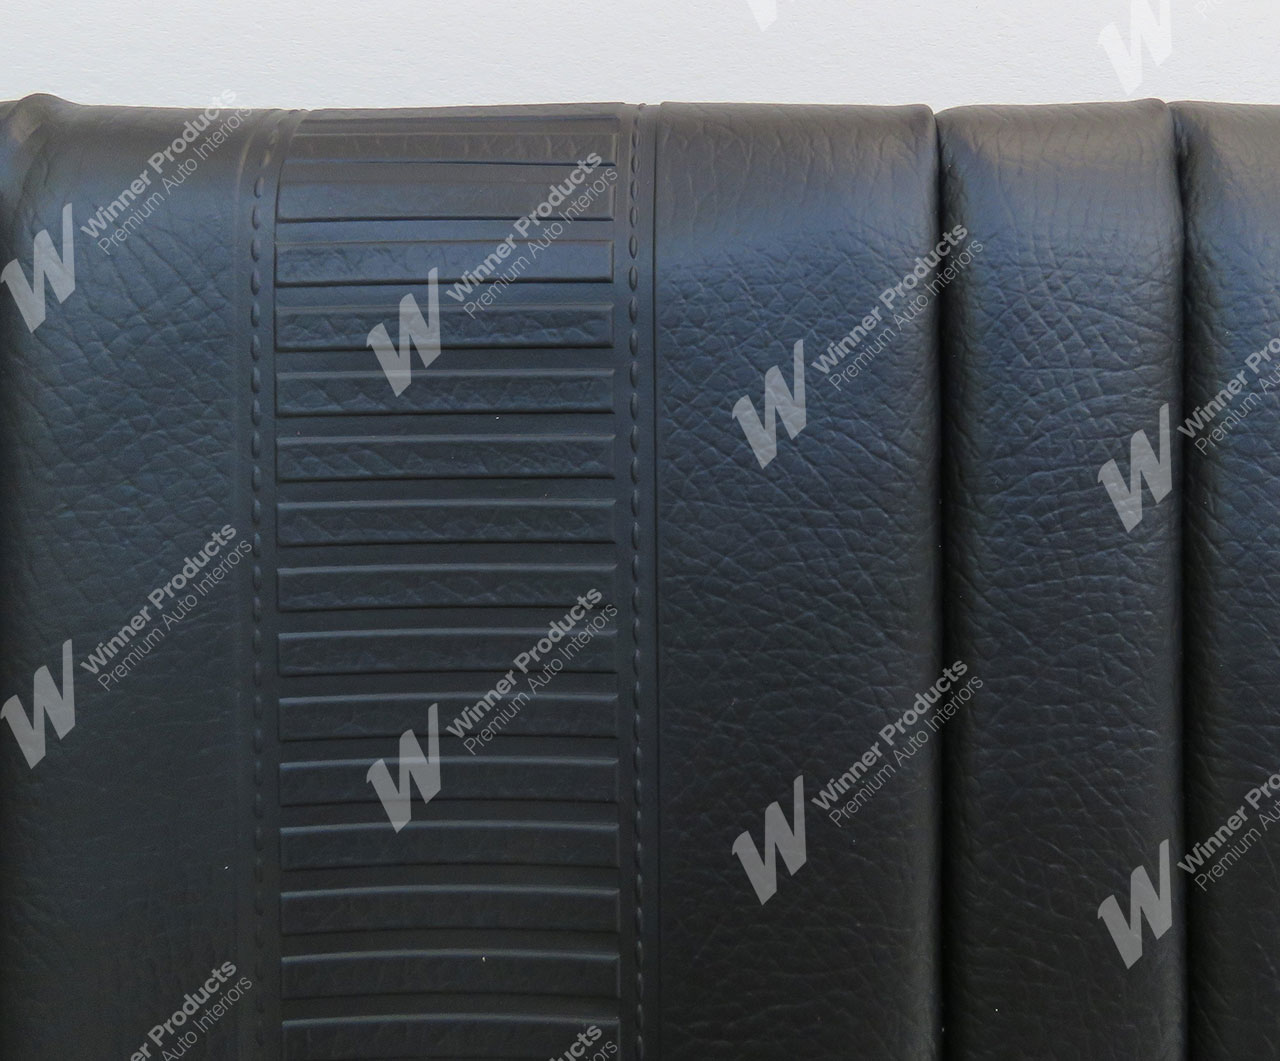 Valiant Regal VG Valiant Regal Hardtop X1 Black Seat Covers (Image 7 of 7)